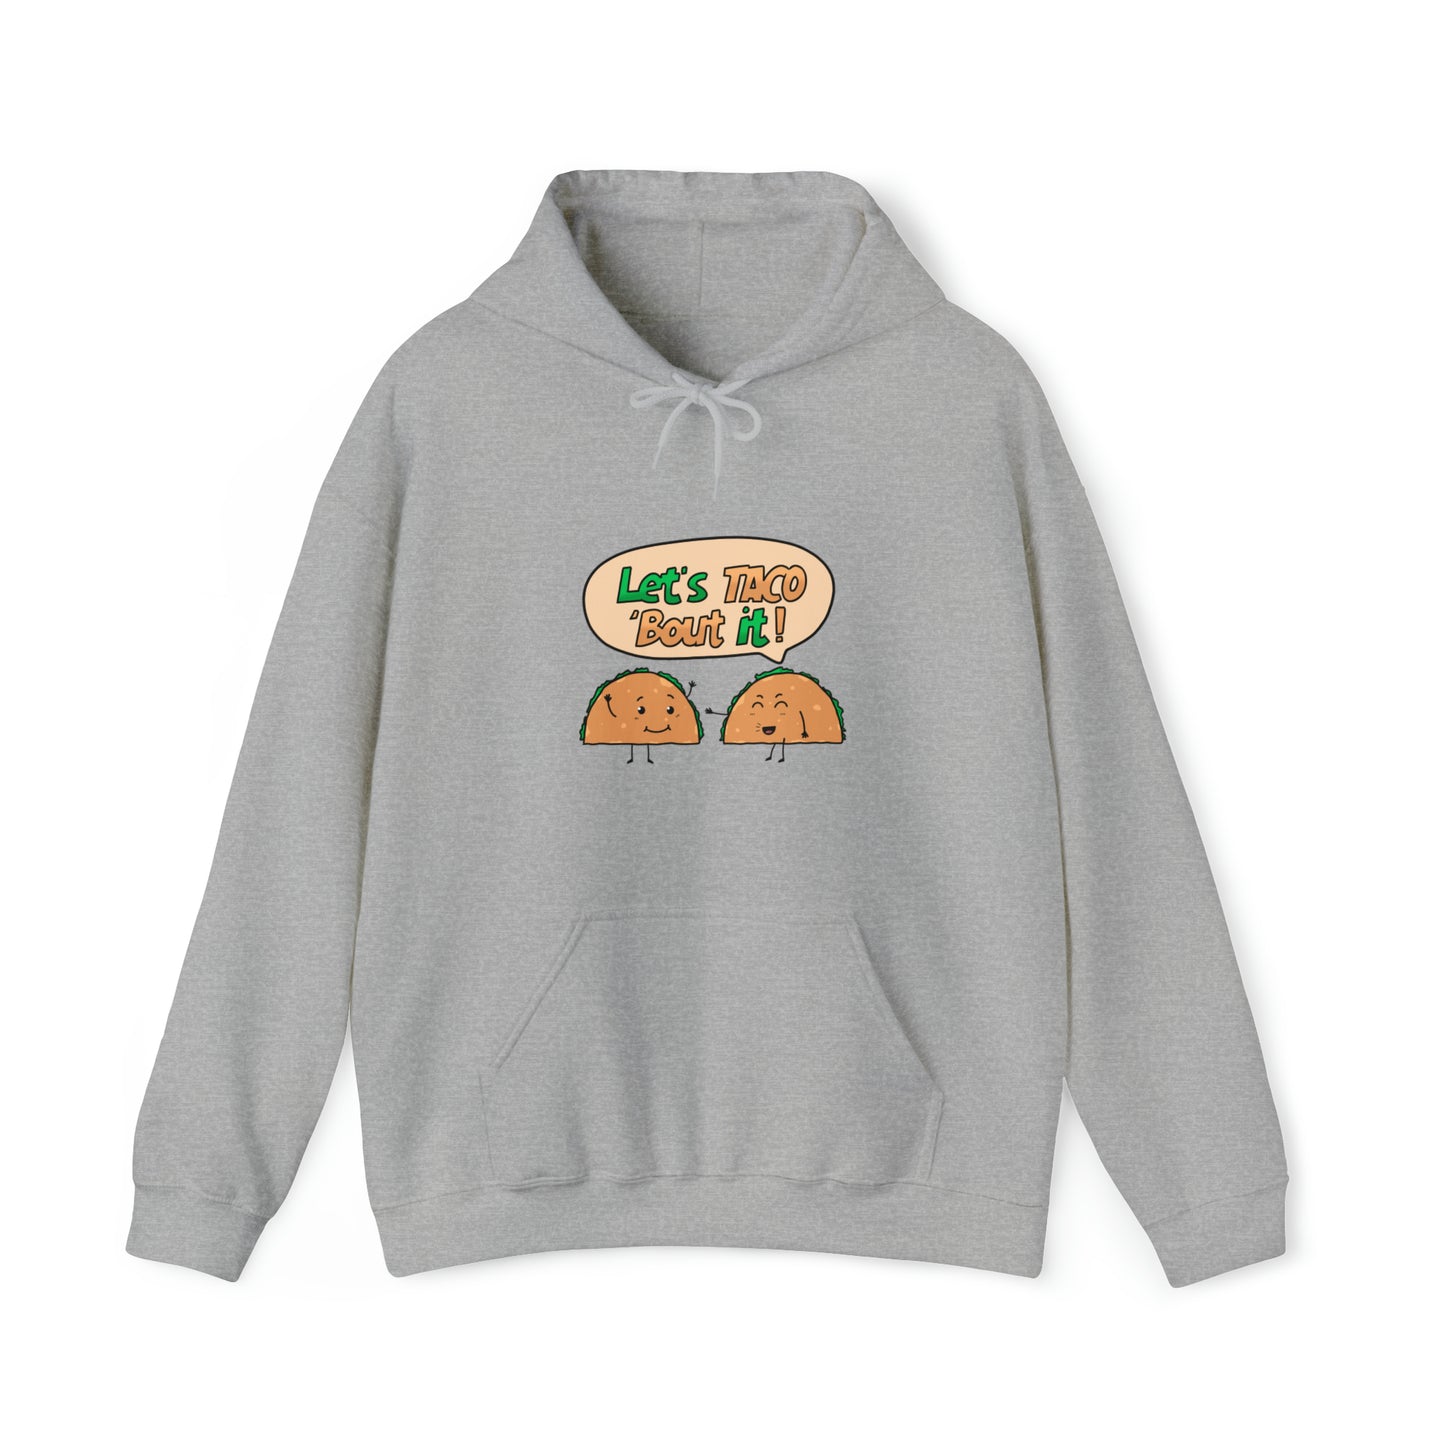 Custom Parody Hooded Sweatshirt, Let's TACO 'bout it design